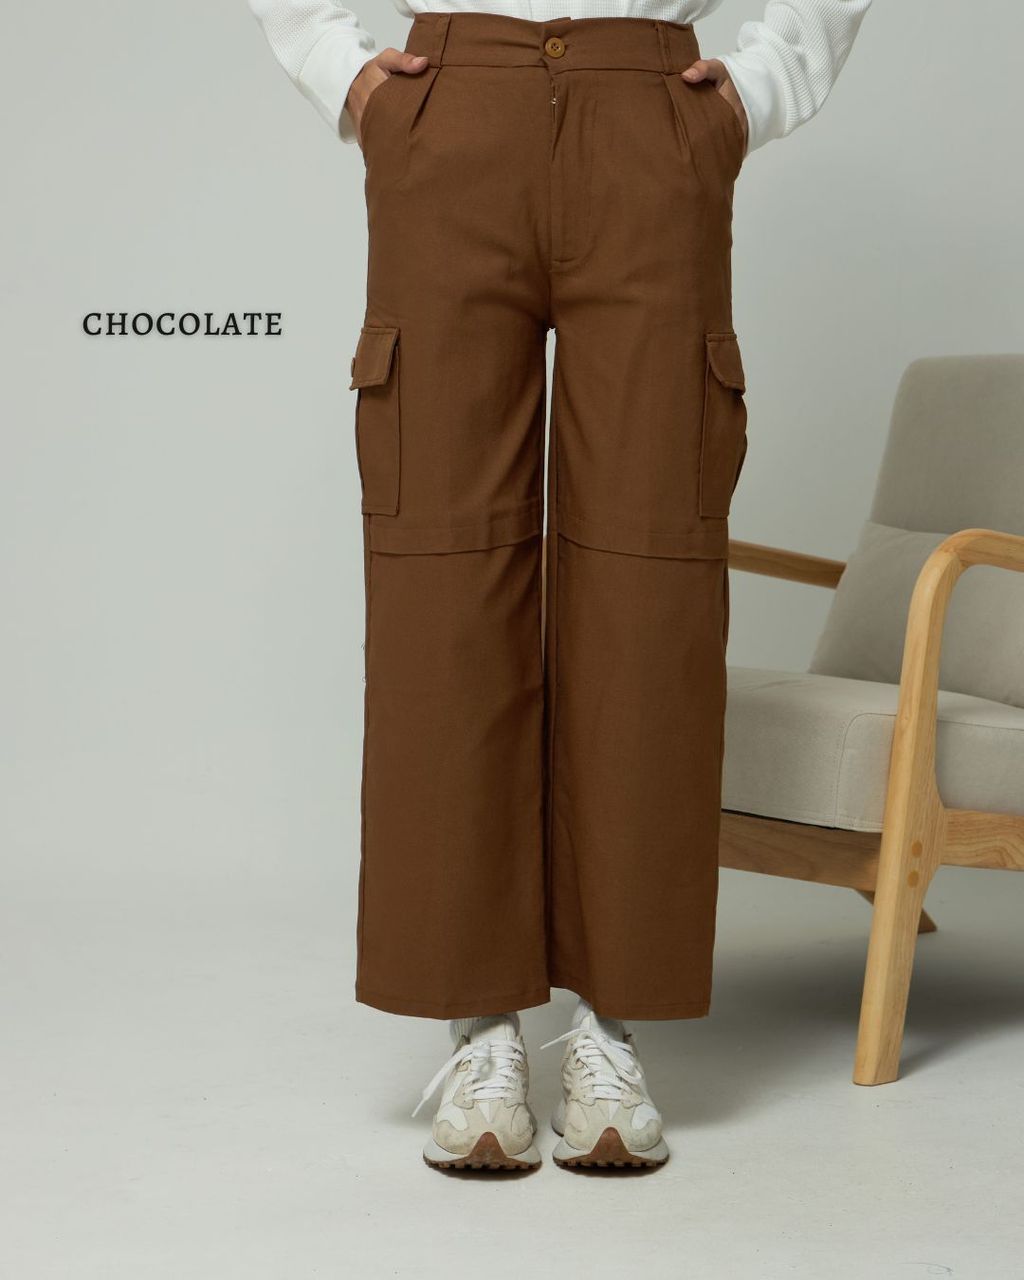 haura-wear-audrey-mix-cotton-skirt-high-waist-cotton-long-pants-seluar-muslimah-seluar-perempuan-palazzo-pants-sluar-skirt (1)